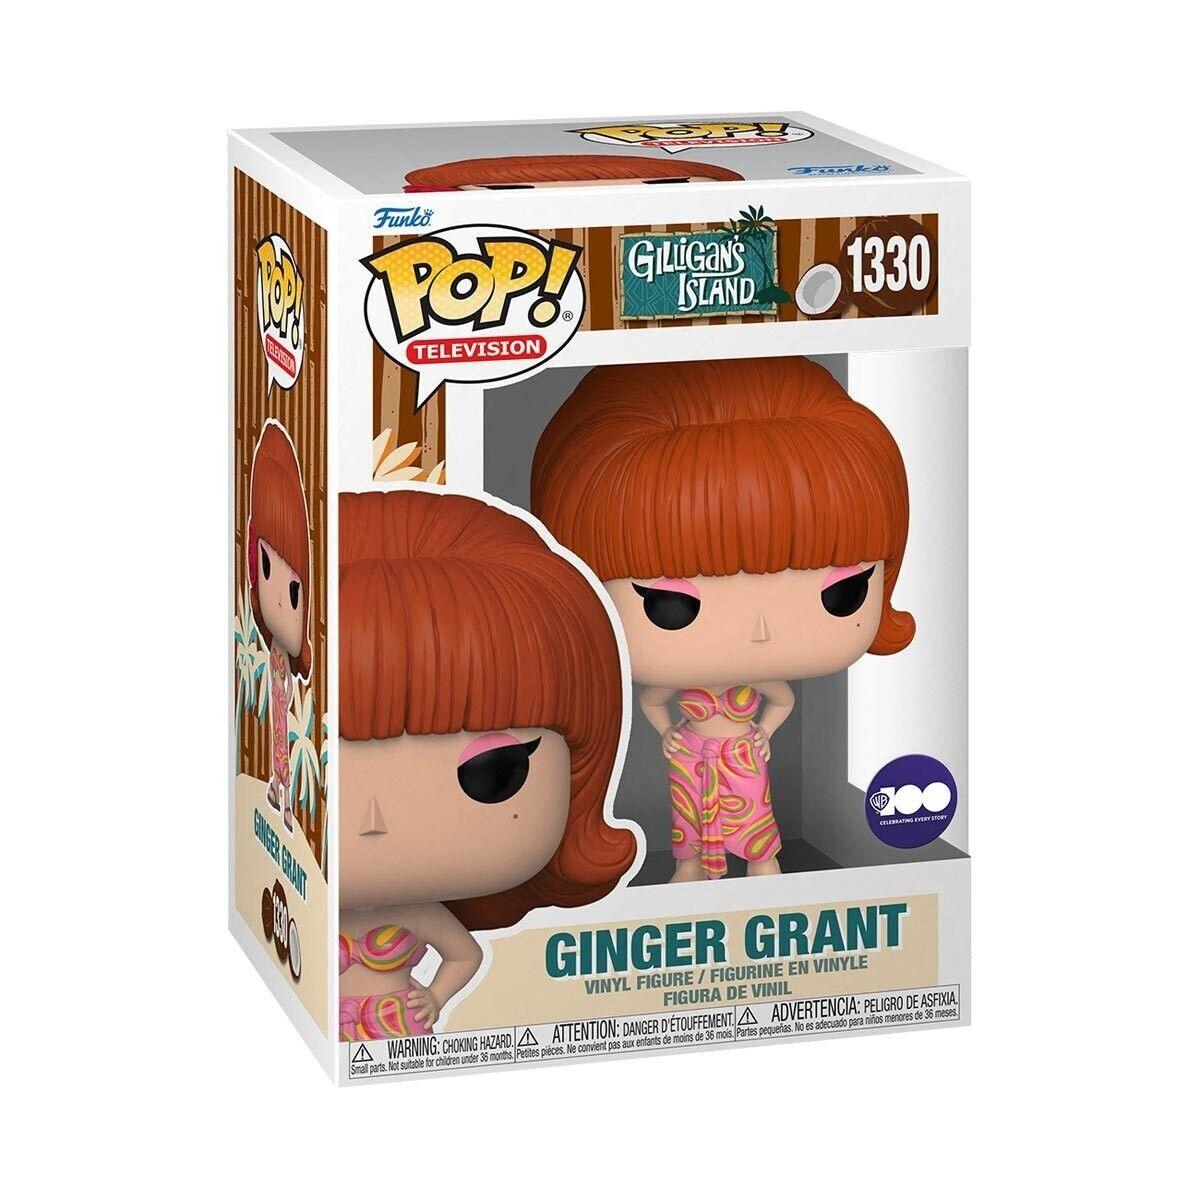 Pop! Television - Gilligan's Island - Ginger Grant - #1330 - Hobby Champion Inc